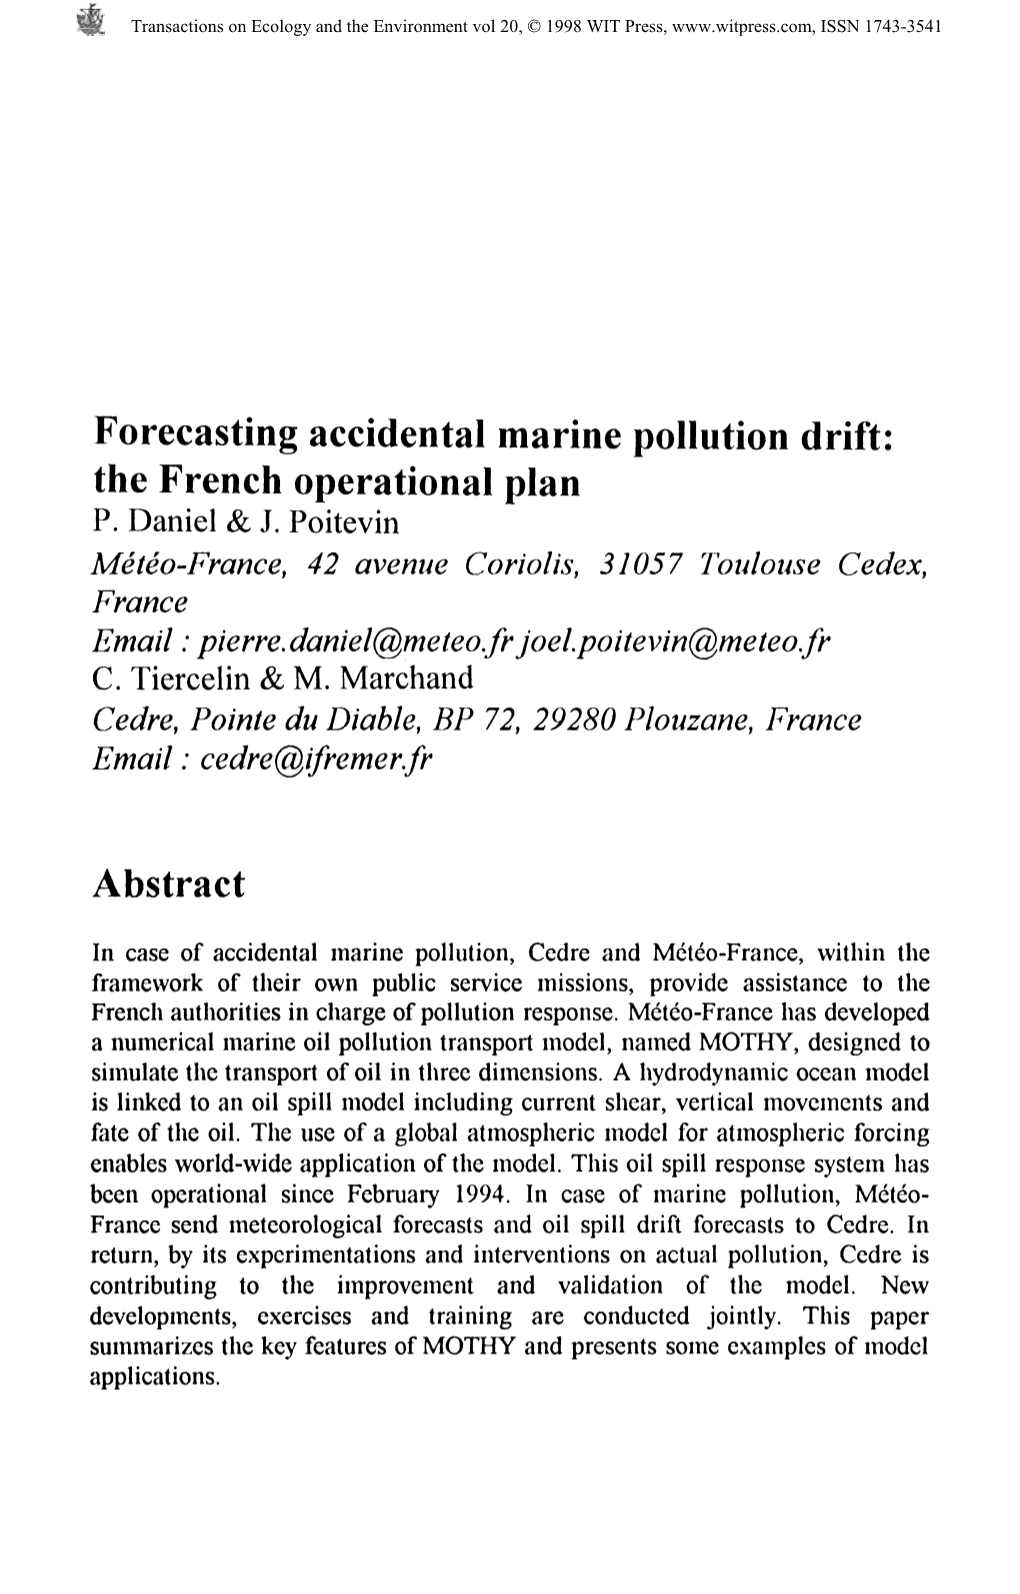 Forecasting Accidental Marine Pollution Drift: the French Operational Plan P. Daniel & J. Poitevin Meteo-France, 42 Avenue C